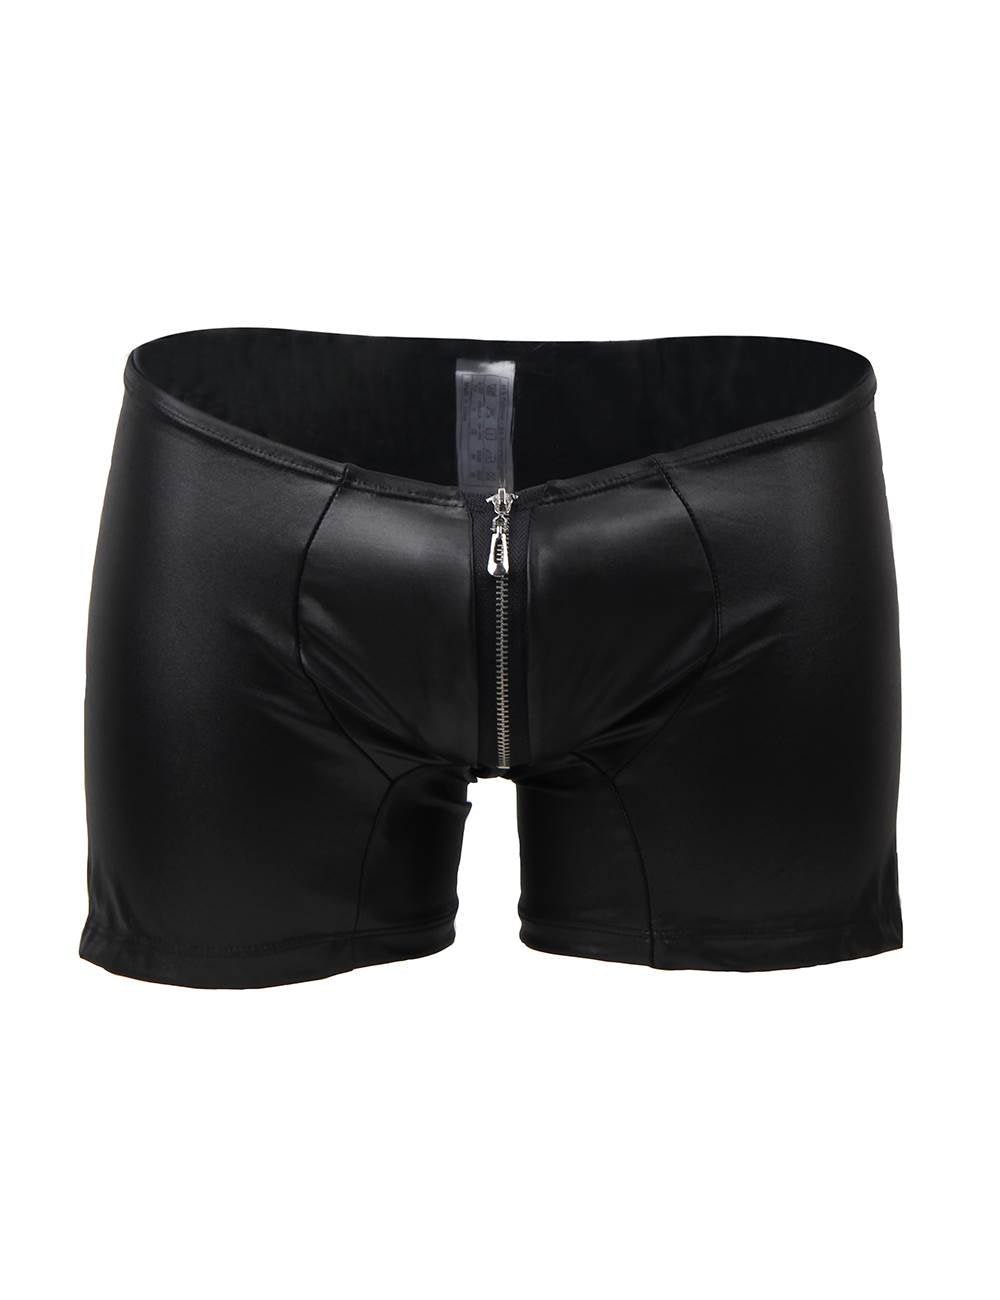 JCSTK -  Mens Wetlook Boxer Shorts with Zipper Pouch Front Black